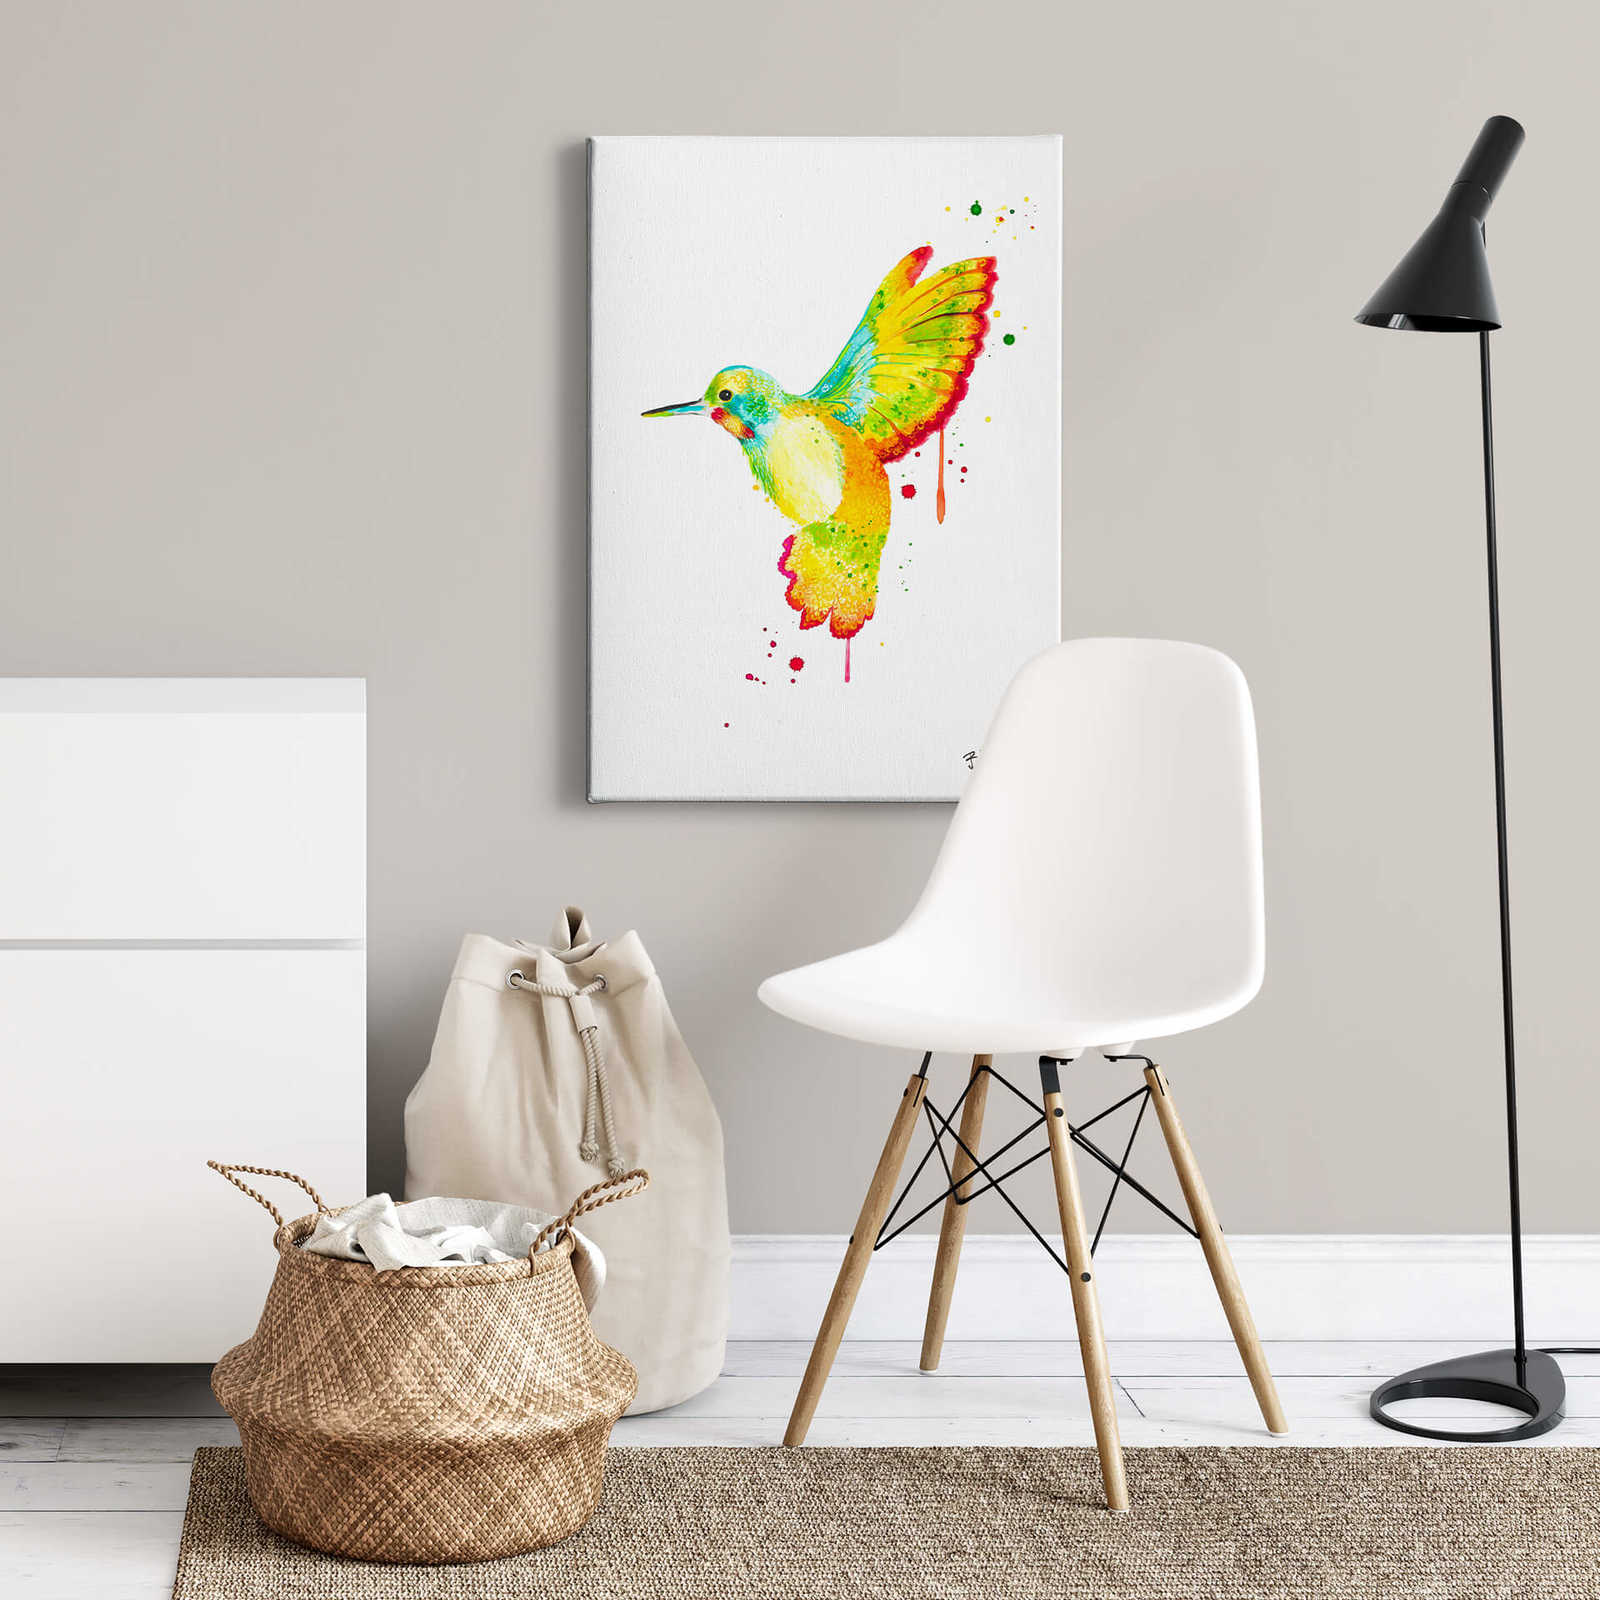             Humingbird by Buttafly, canvas print met kleurrijke kolibrie - 0.50 m x 0.70 m
        